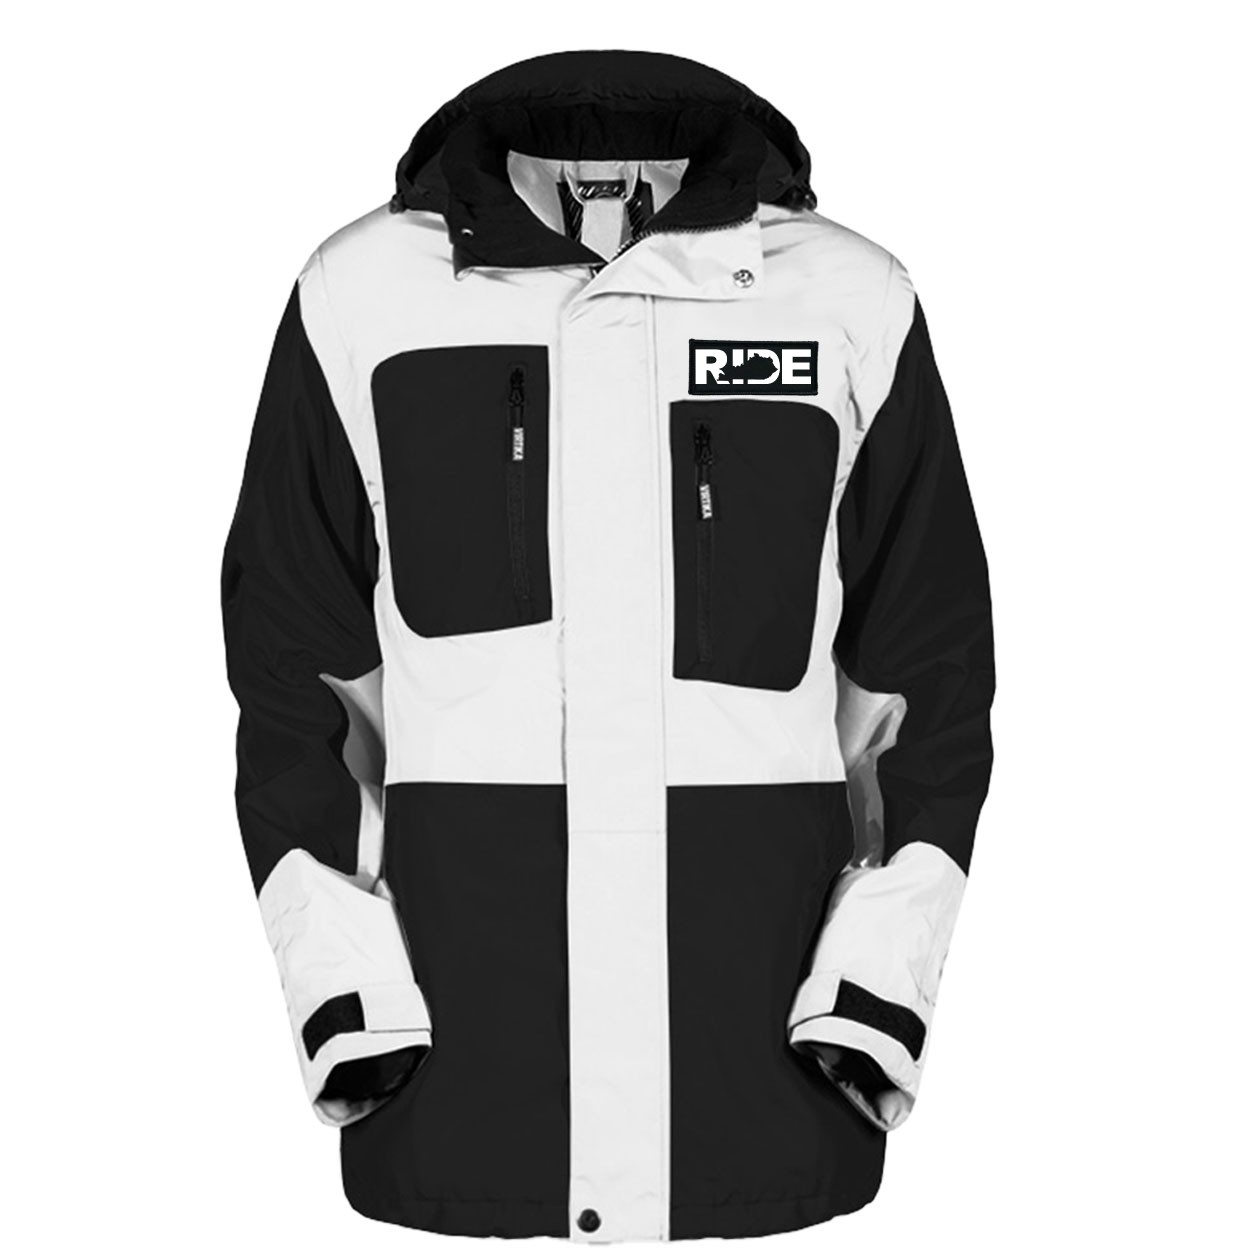 Ride Kentucky Pro Waterproof Breathable Winter Virtika Jacket Black/White (White Logo)